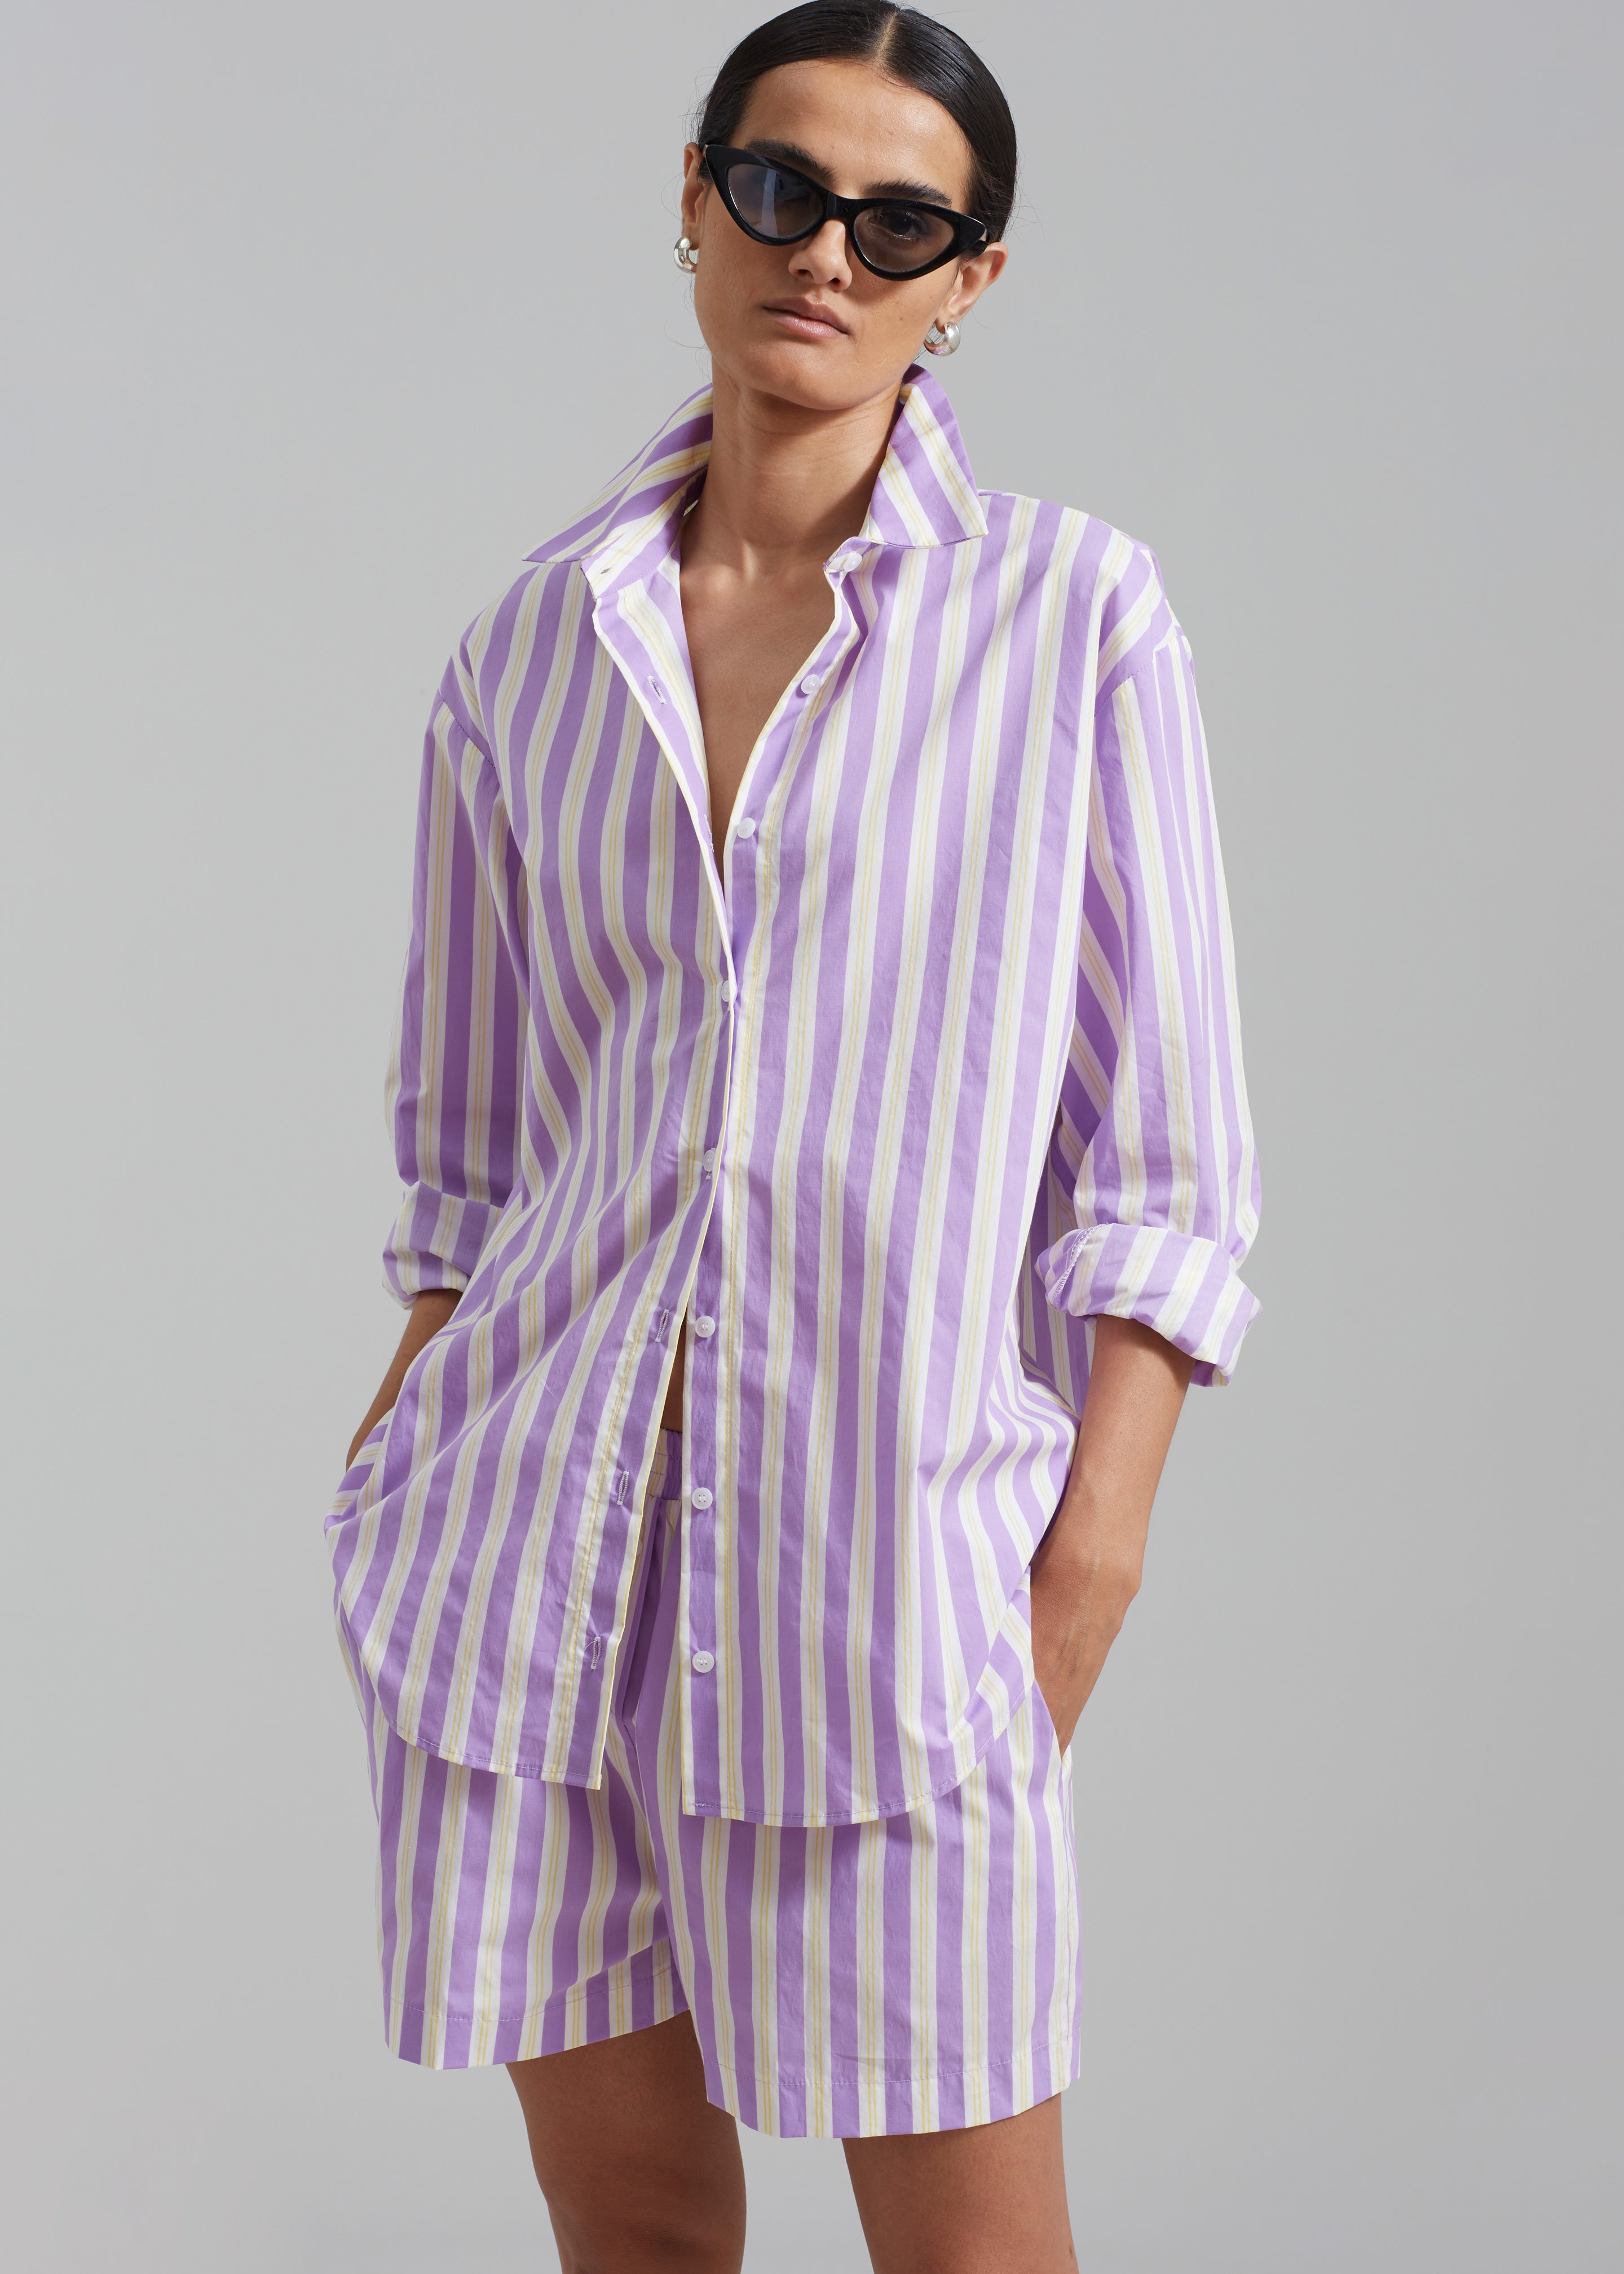 Juno Cotton Shirt - Violet Stripe - 1